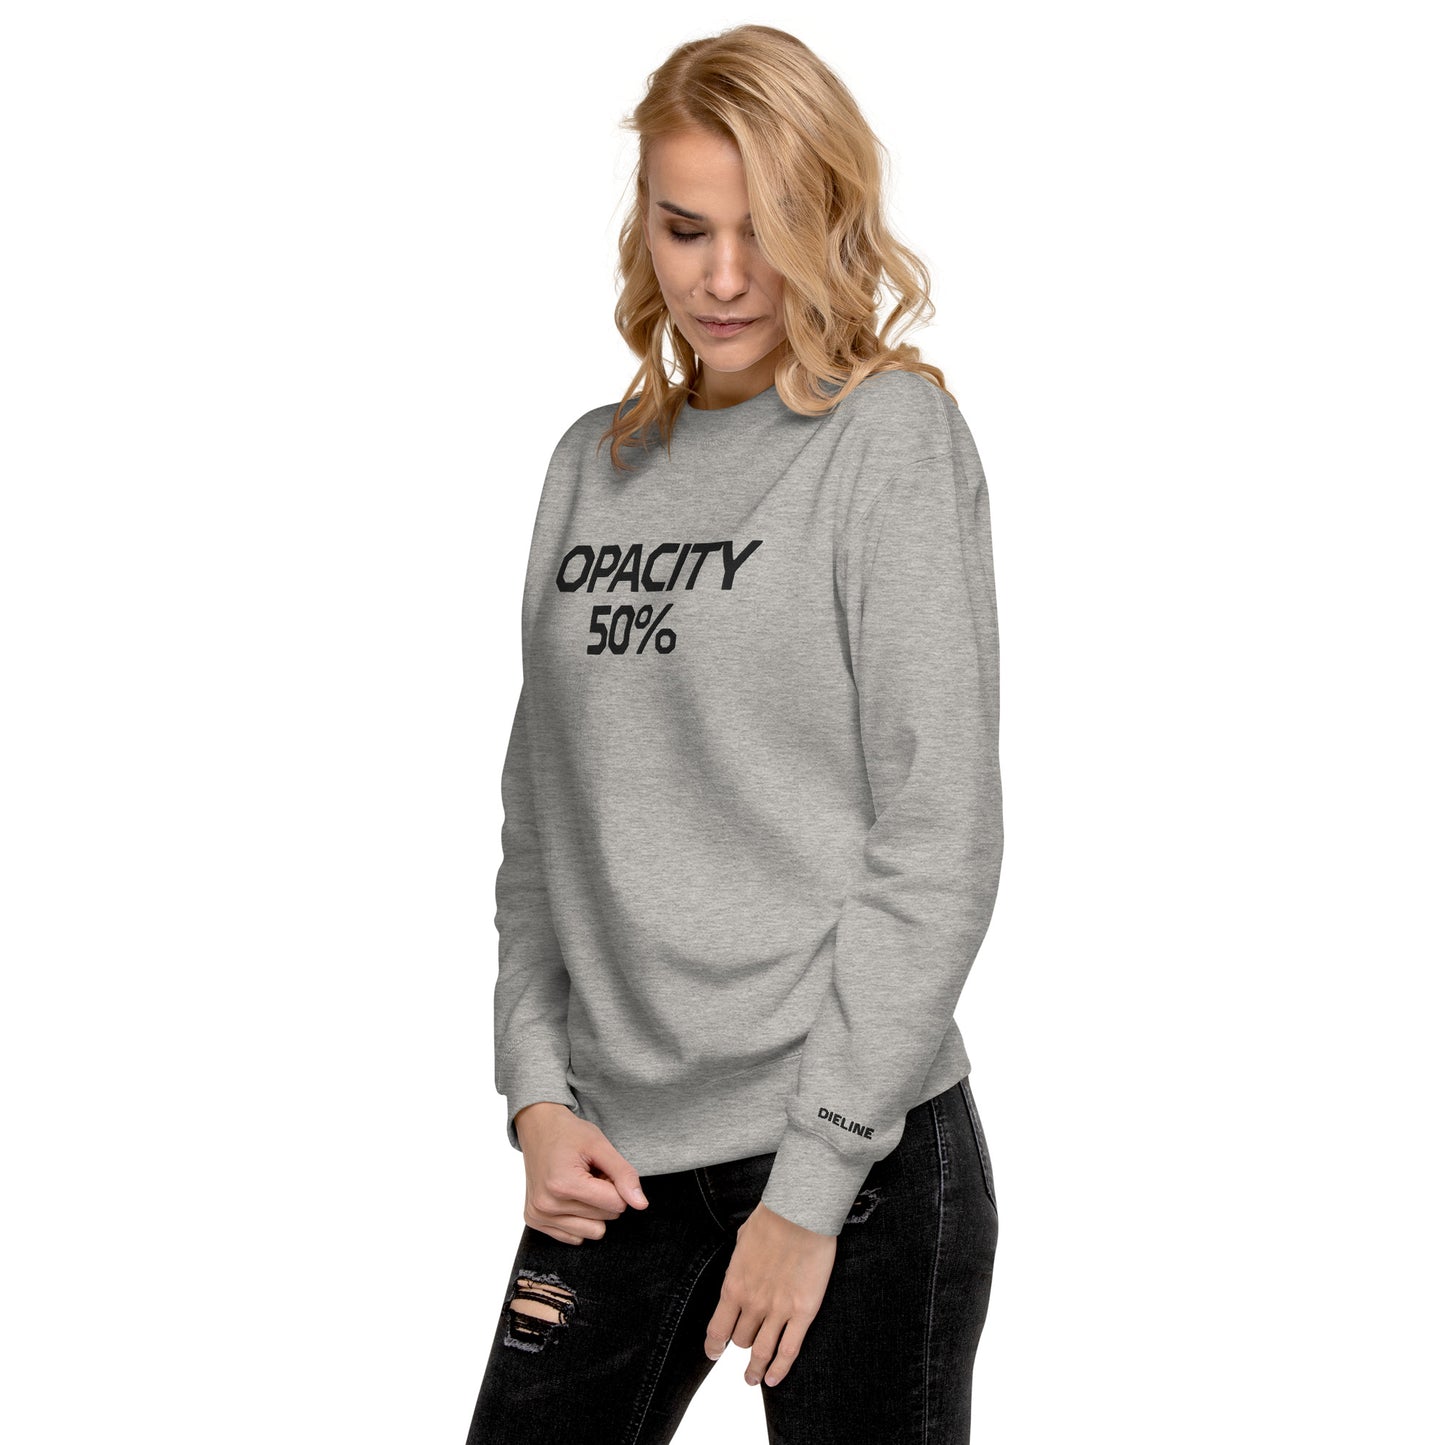 Opacity 50% Large Embroidery Unisex Premium Sweatshirt